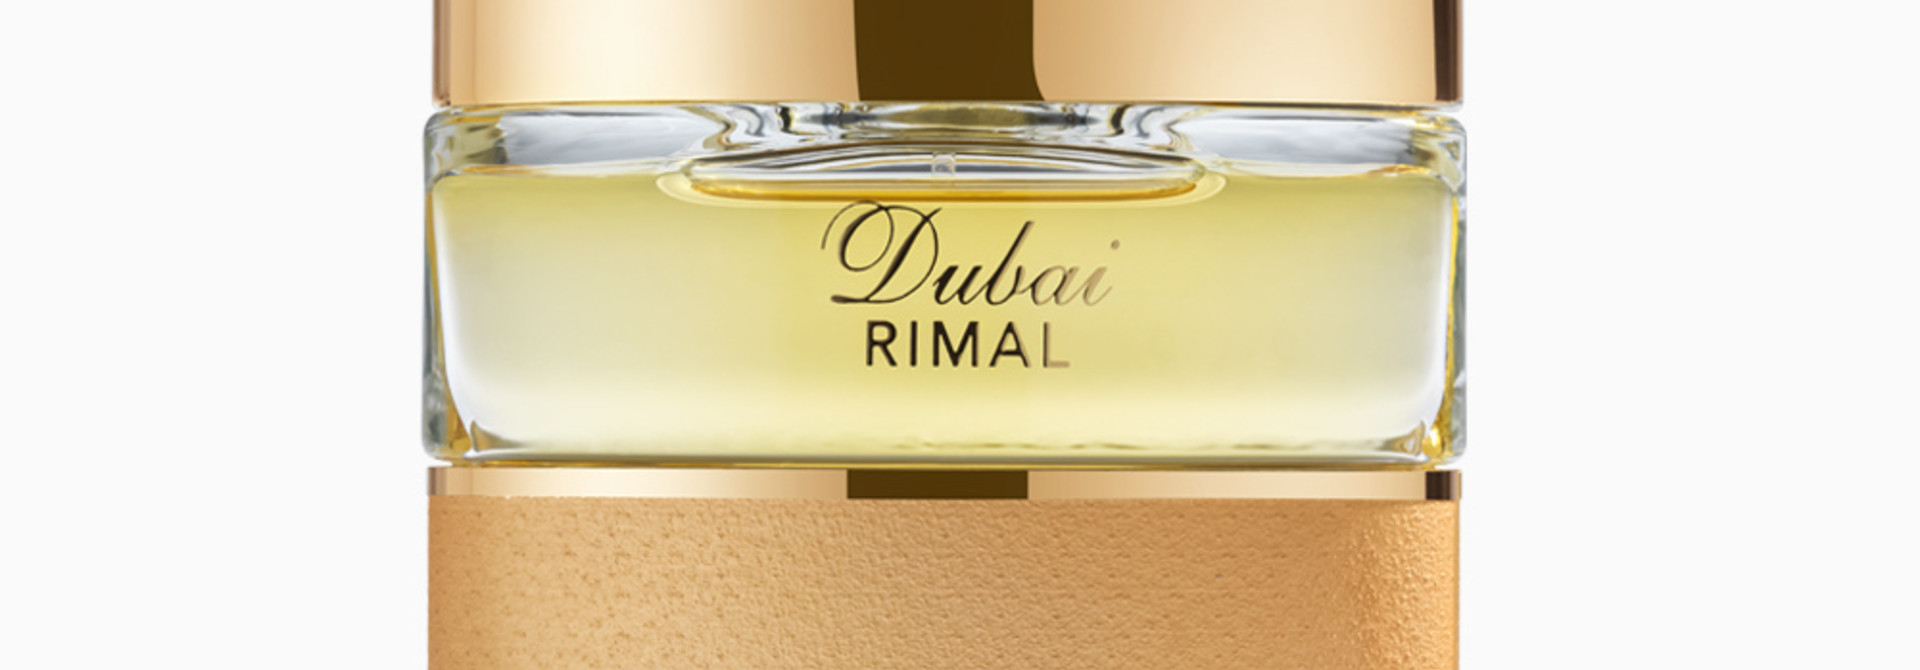 The Spirit of Dubai - Rimal